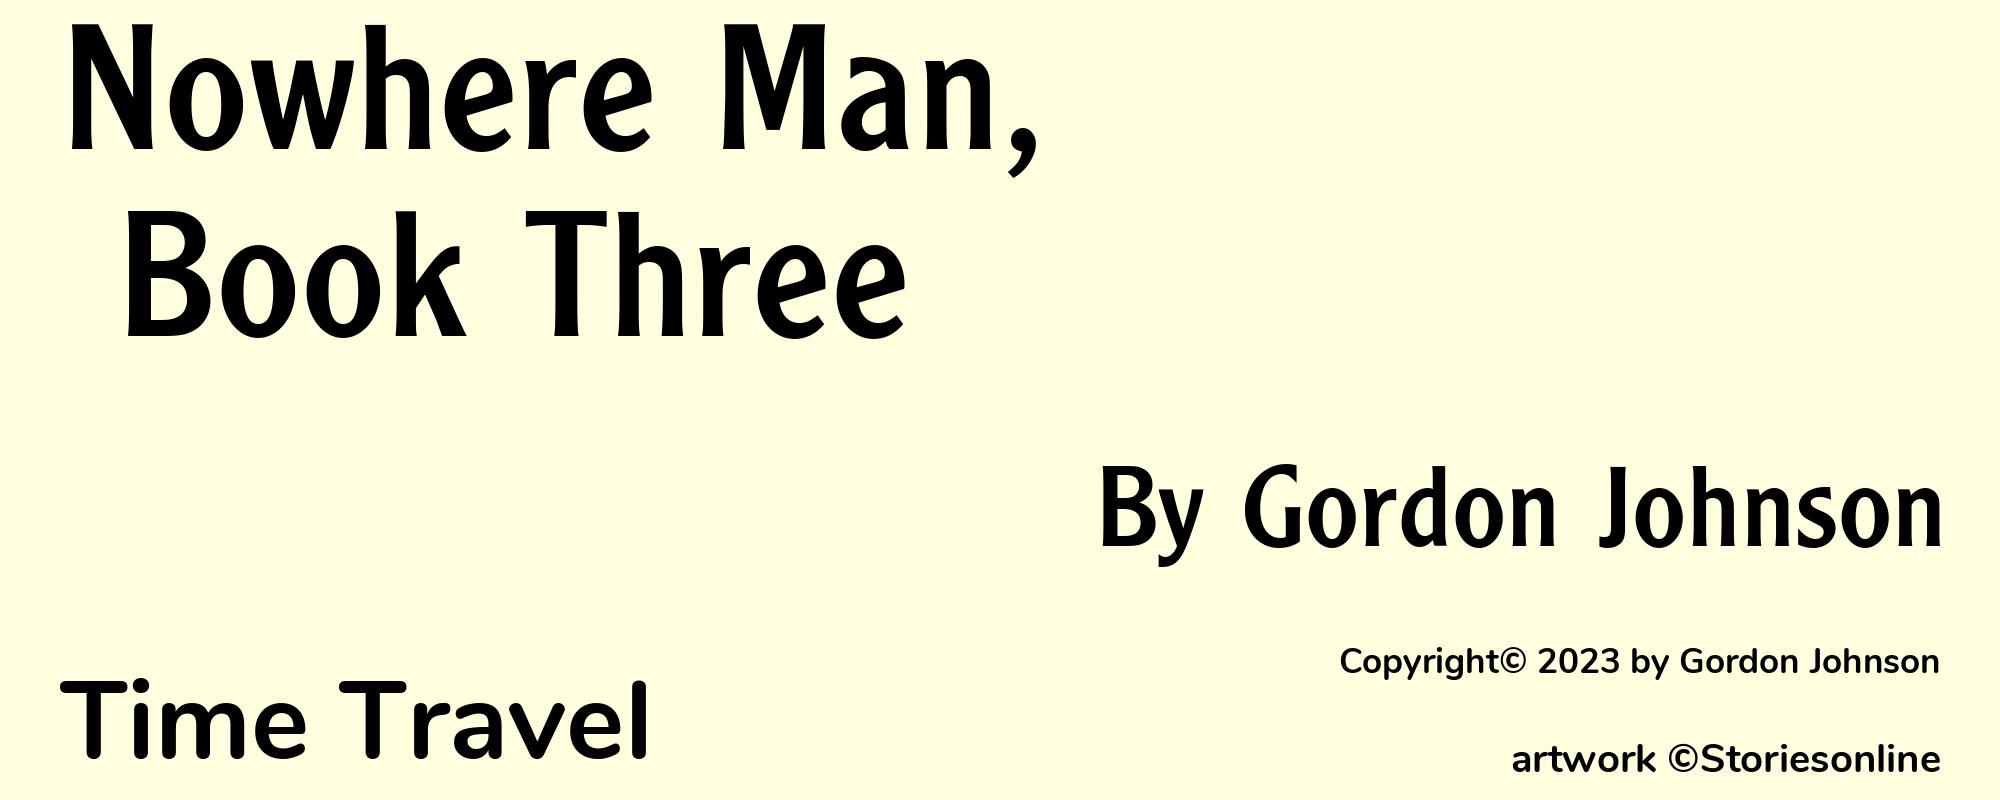 Nowhere Man, Book Three - Cover